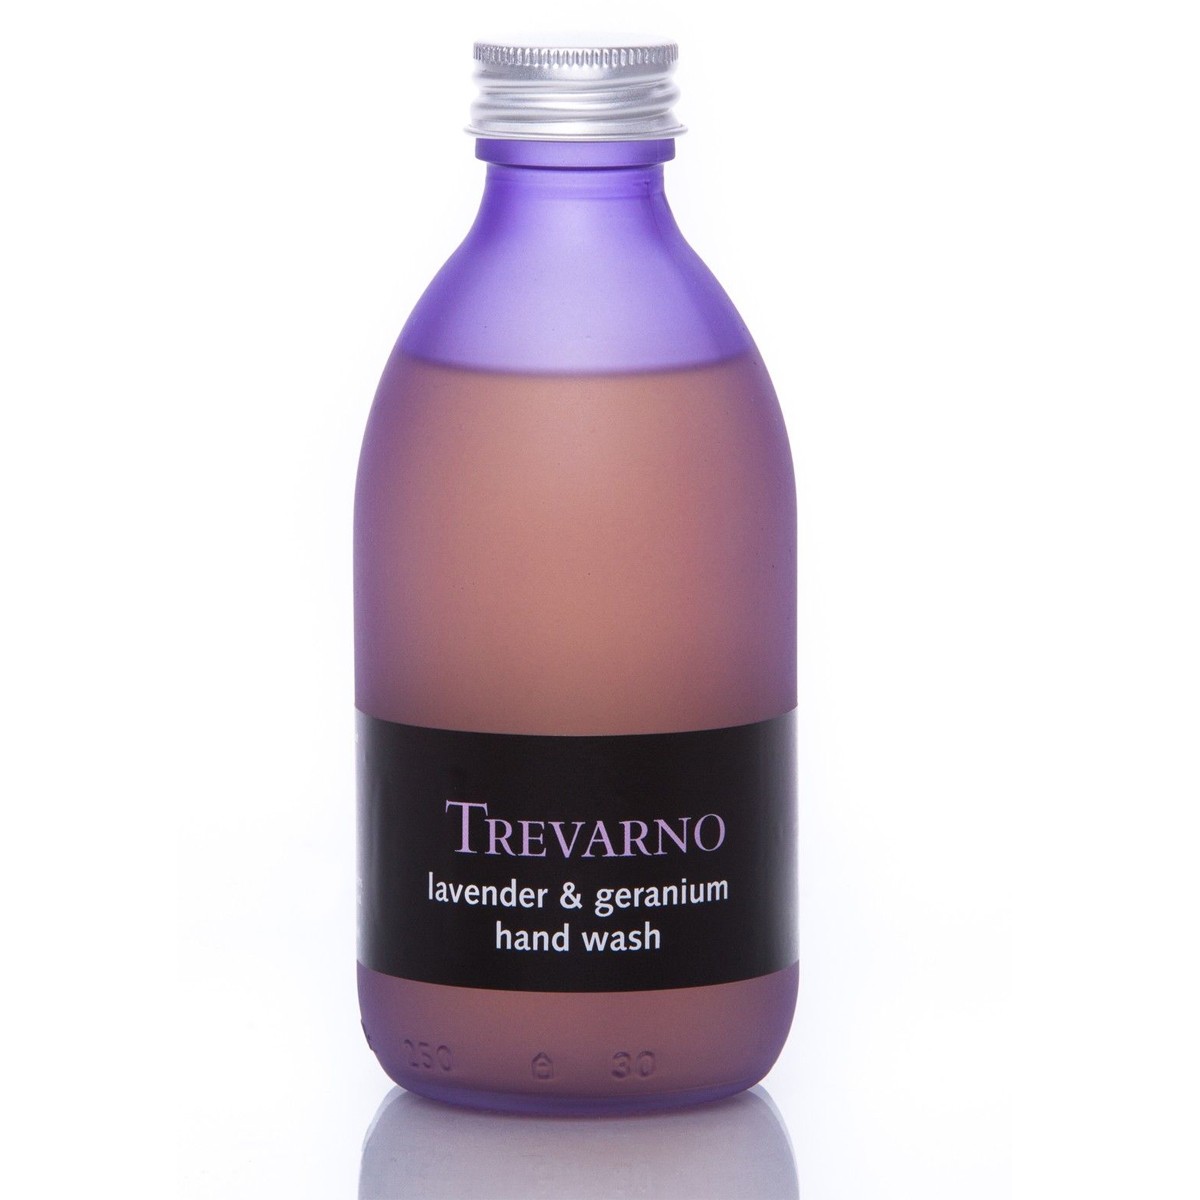 Trevarno Lavender & Geranium Hand Wash